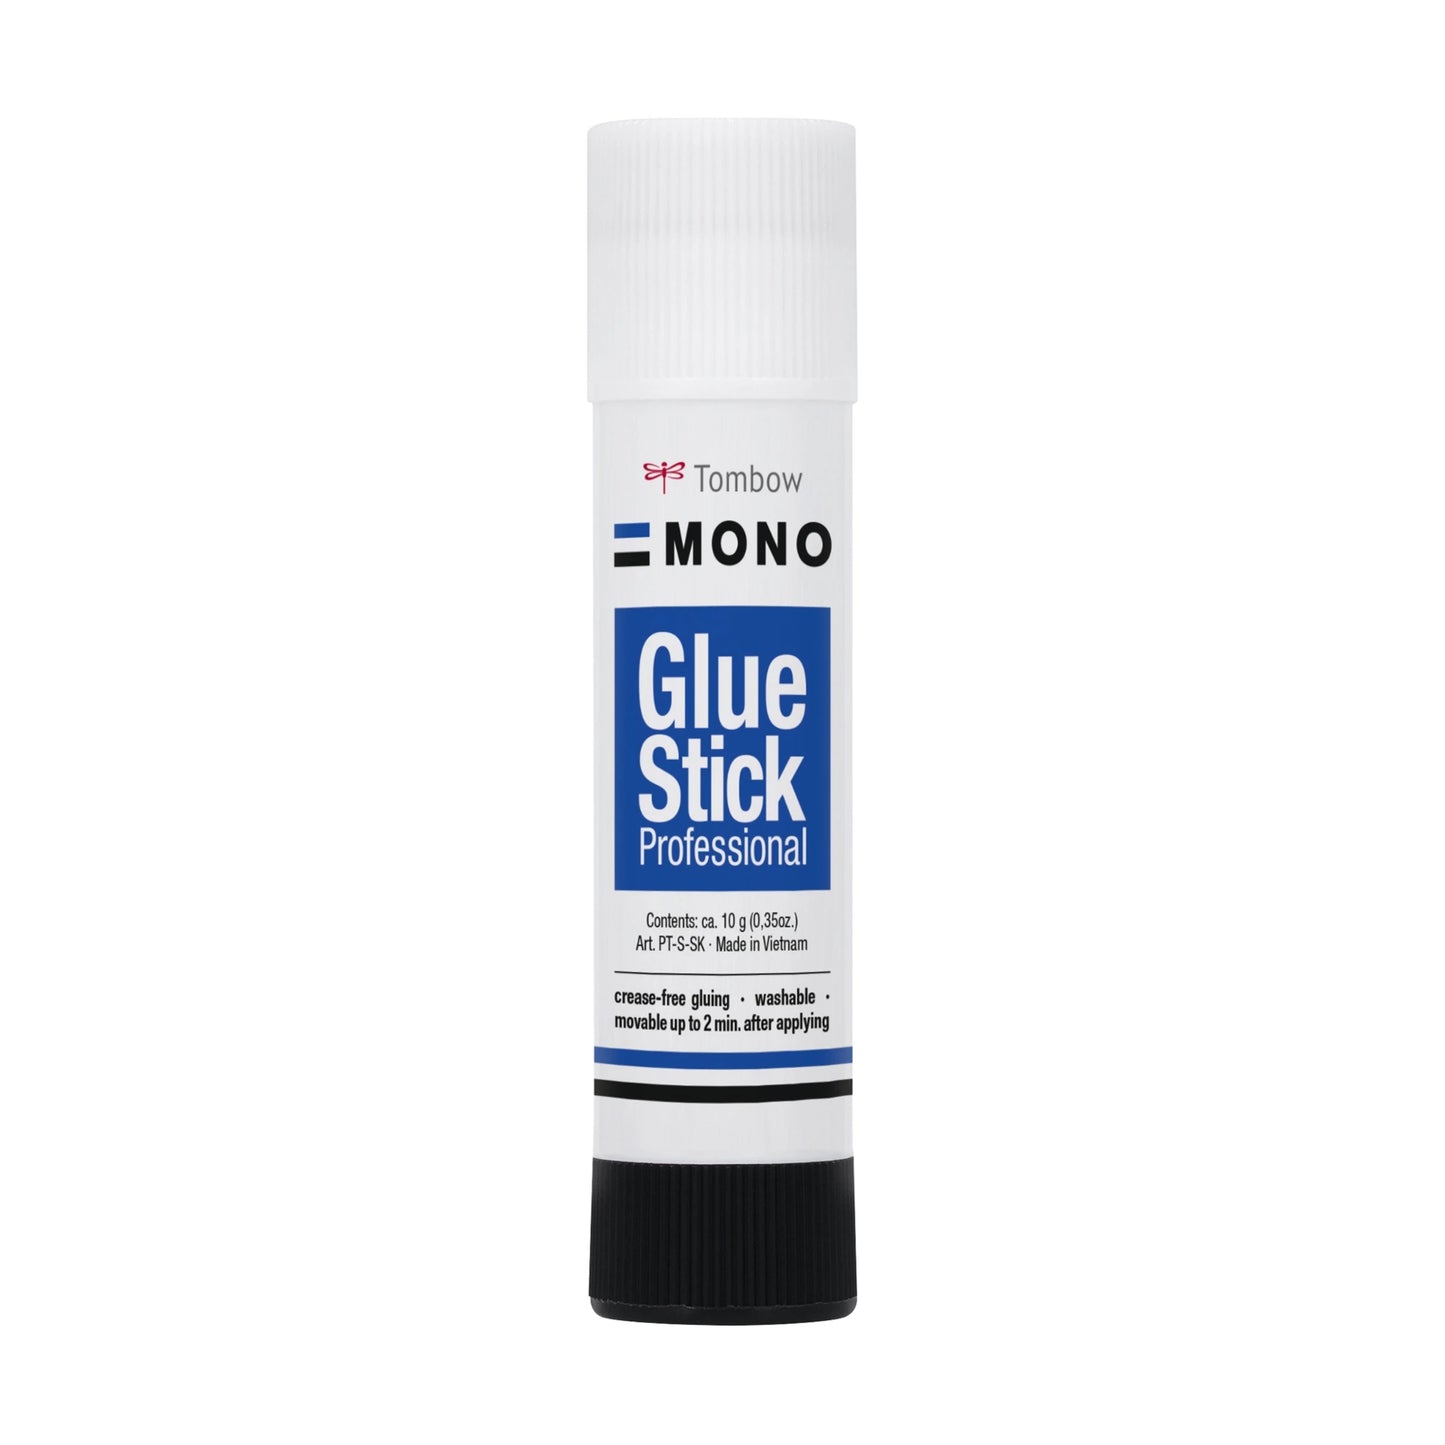 Tombow Mono Glue Stick, 10g